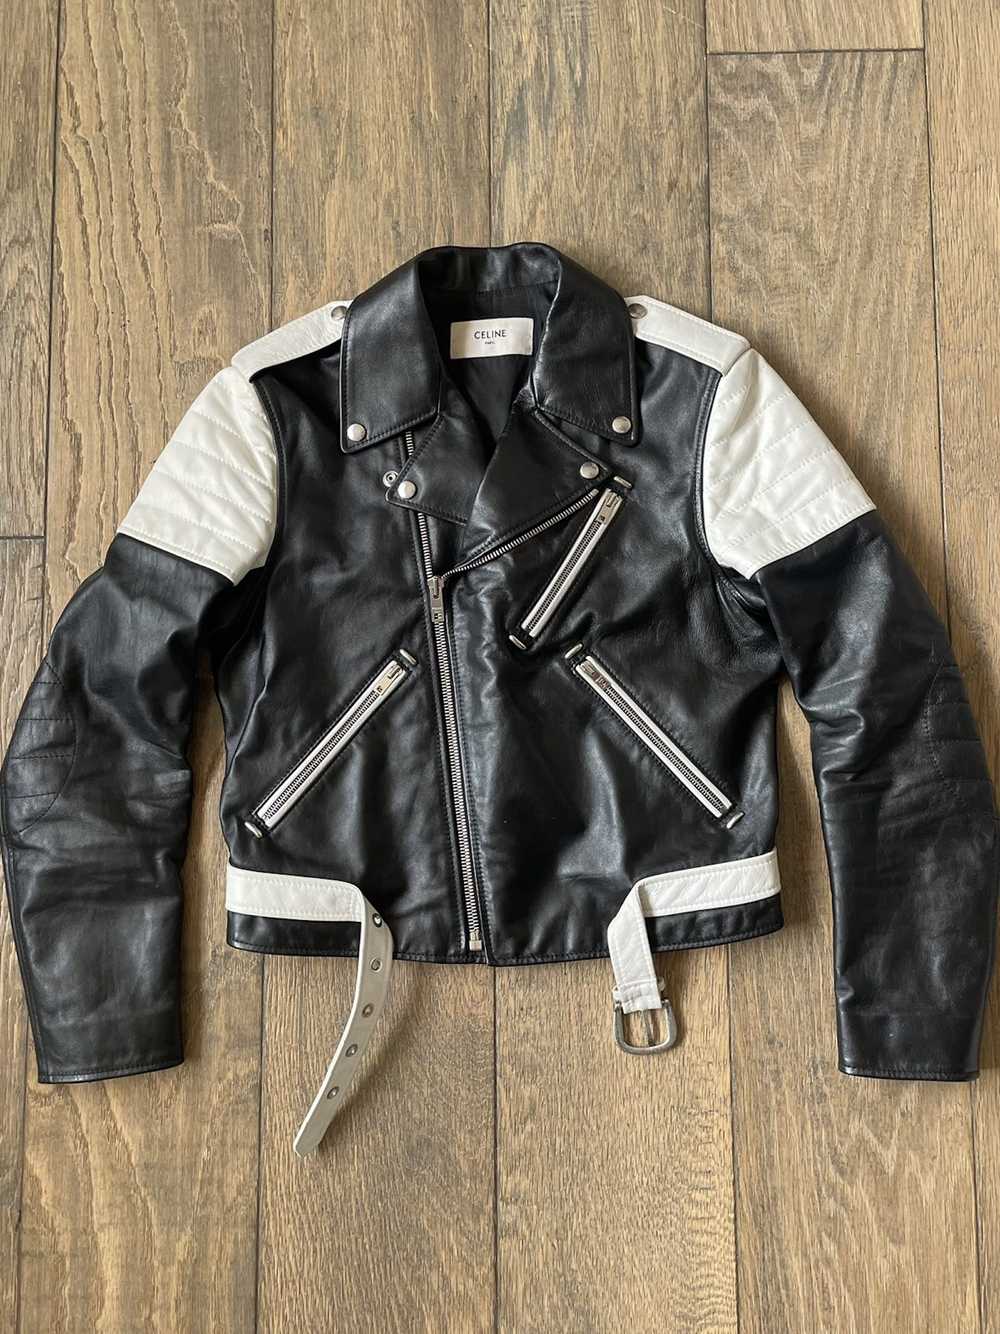 Celine Celine Motorcycle Leather Jacket - image 2